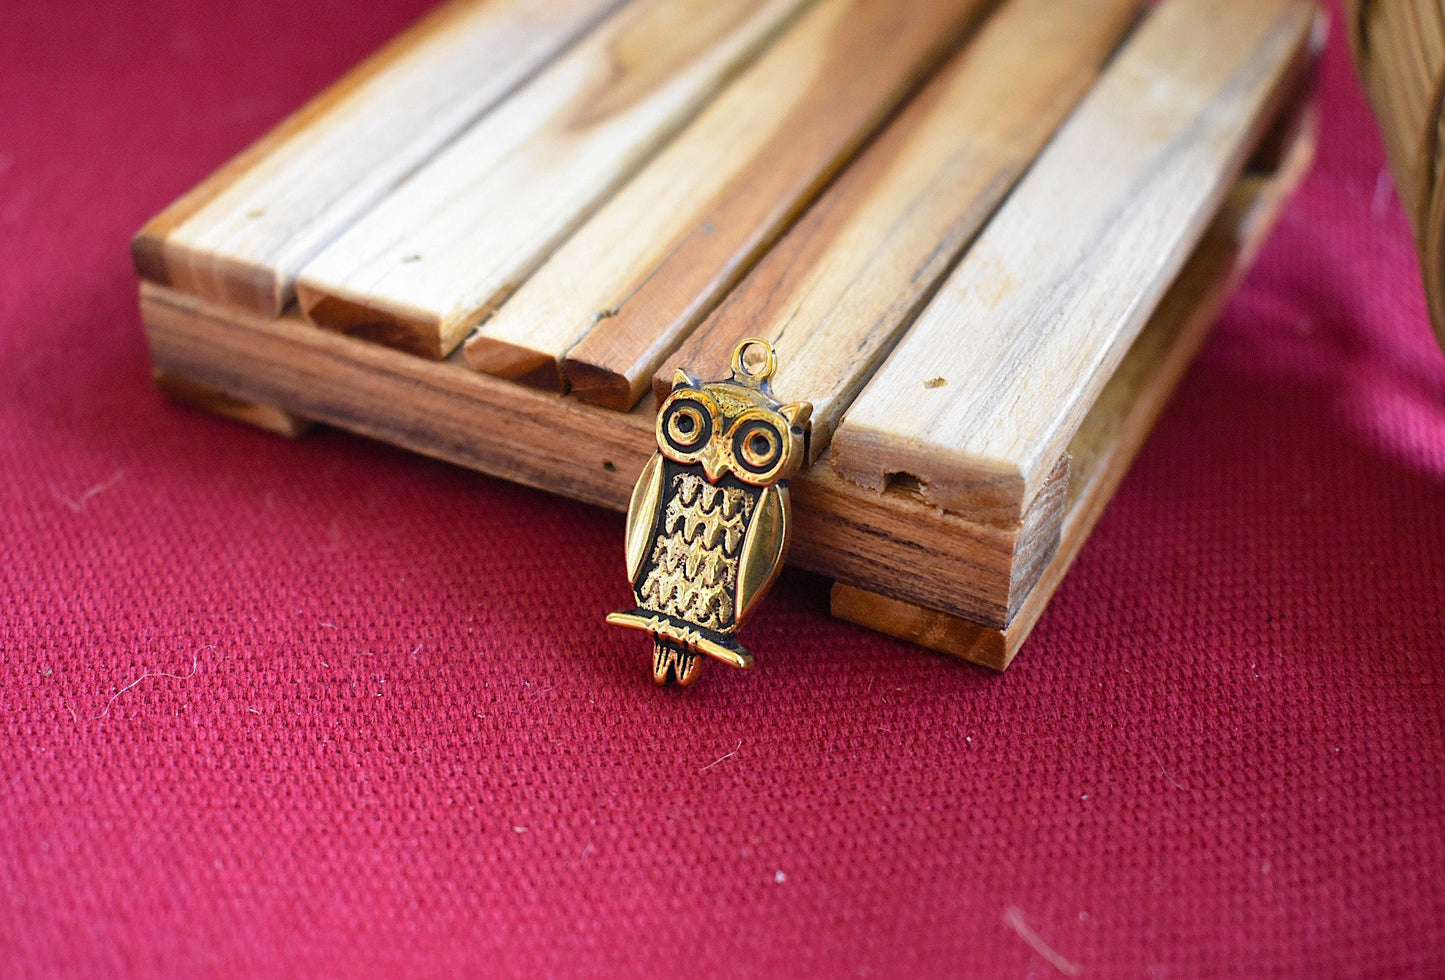 Unique Owl Bird Handmade Gold Brass Necklace Pendant Jewelry